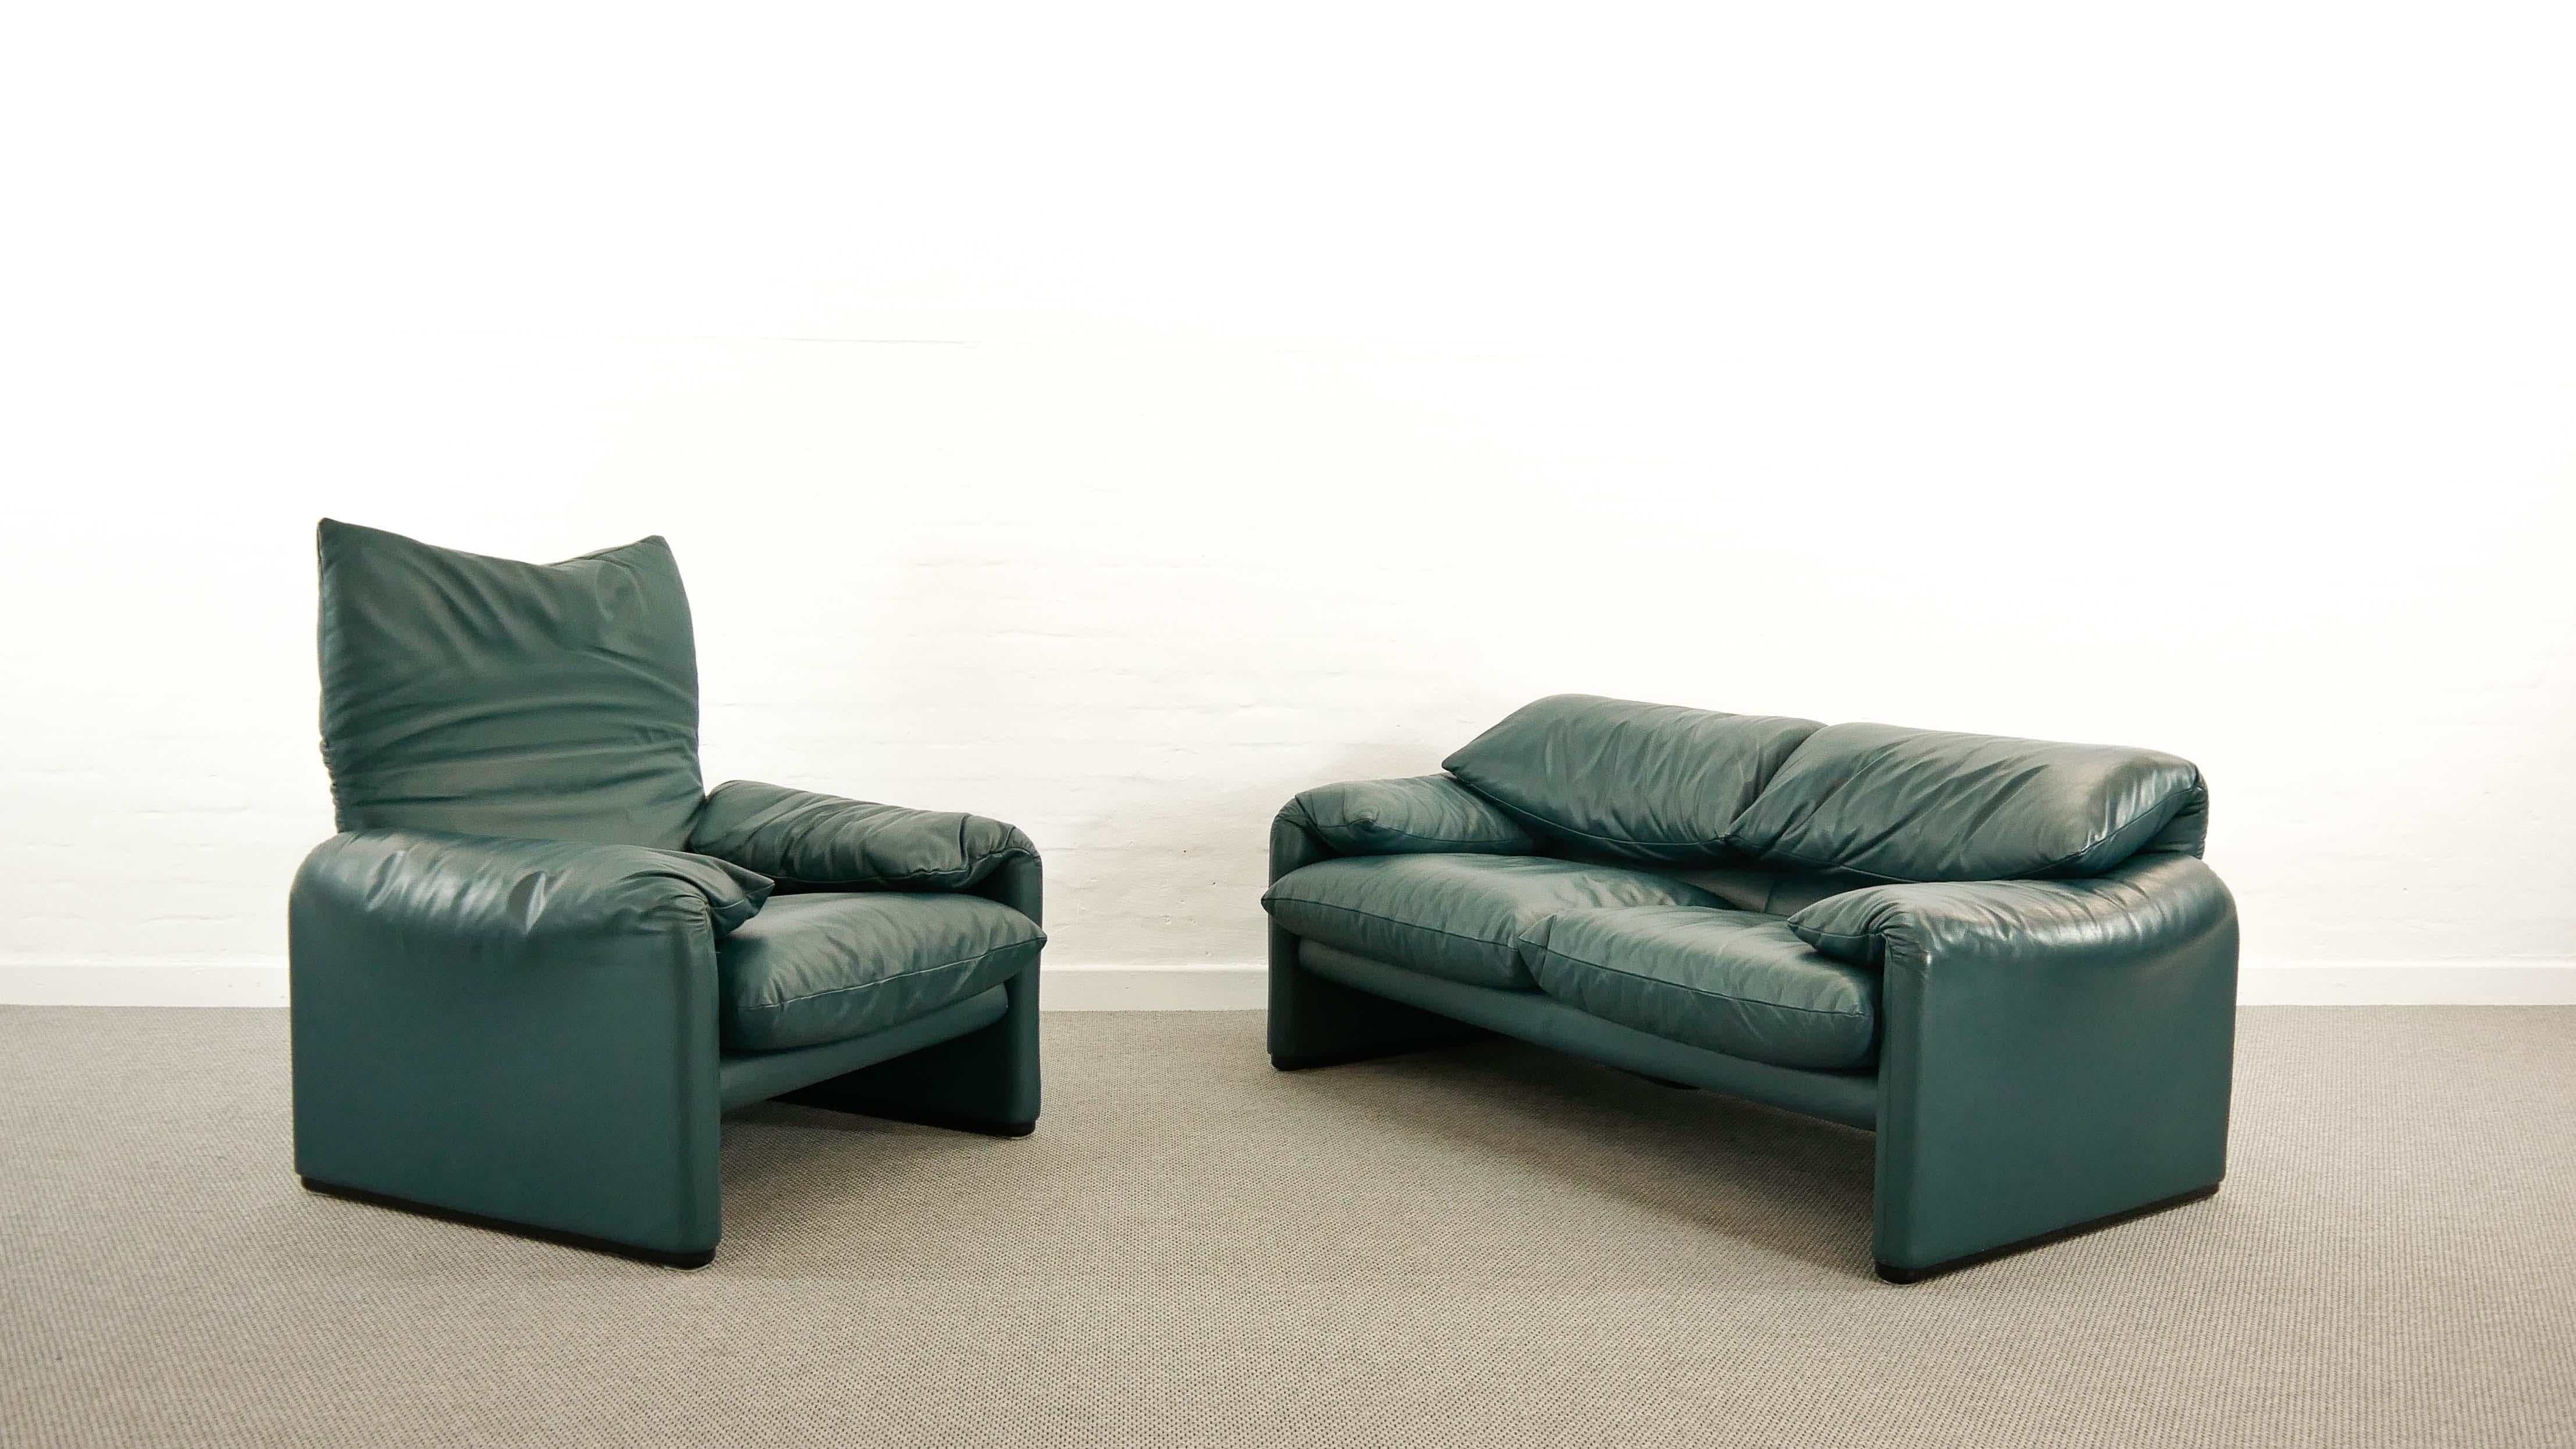 Cassina Maralunga 3-Seat Sofa by Vico Magistretti in Petrol-Darkgreen Leather 3